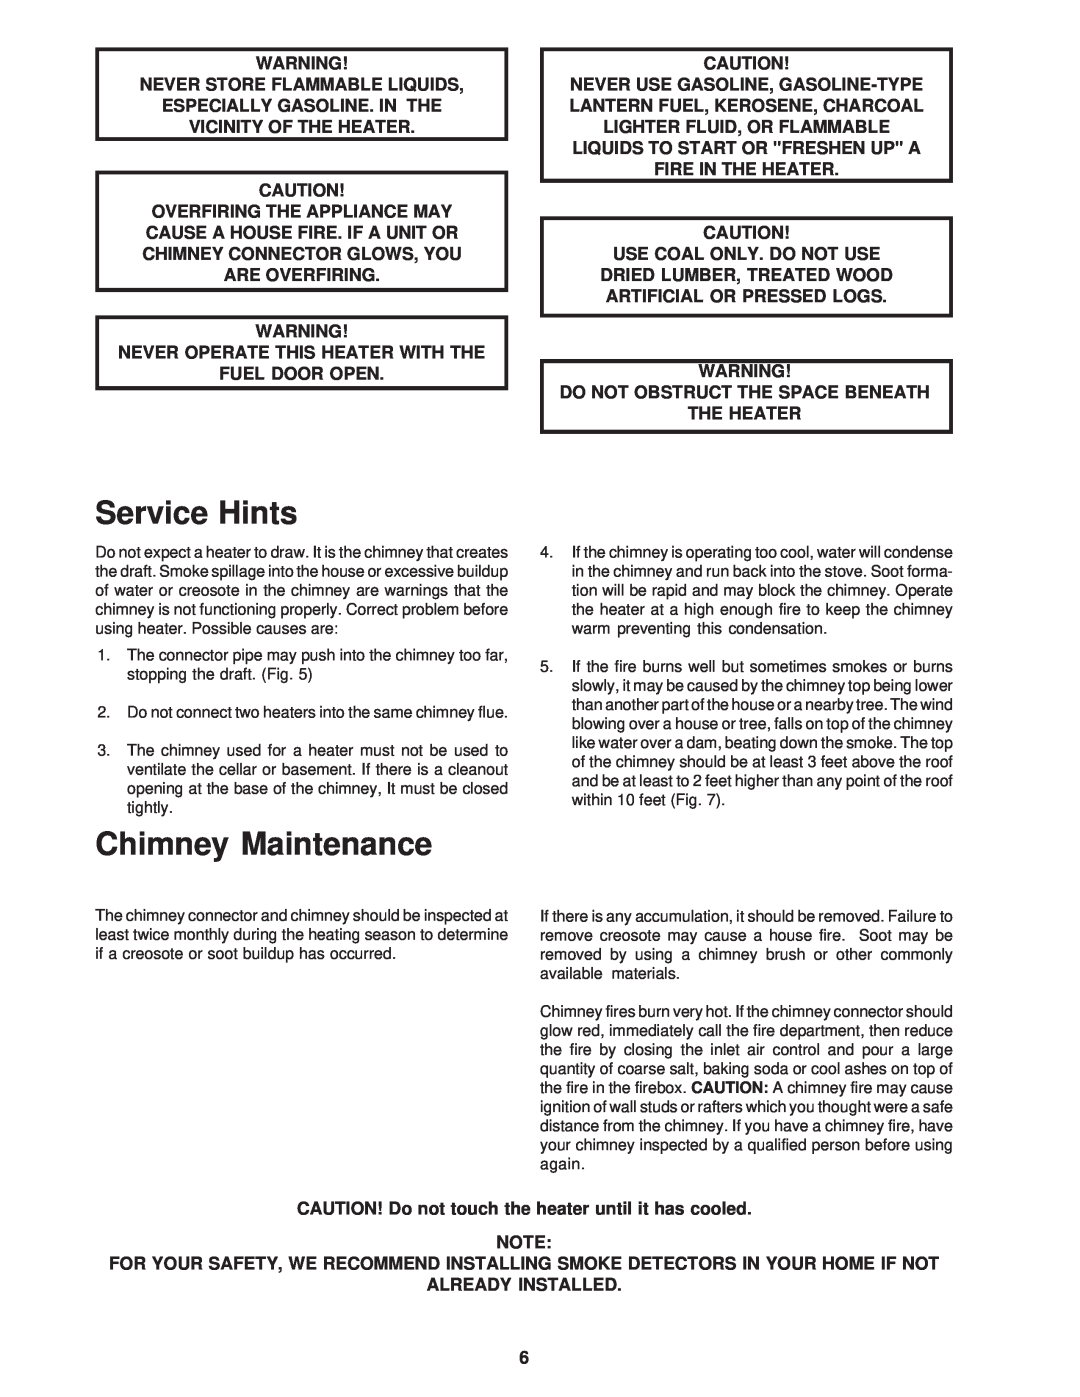 United States Stove CSSU owner manual Service Hints, Chimney Maintenance 